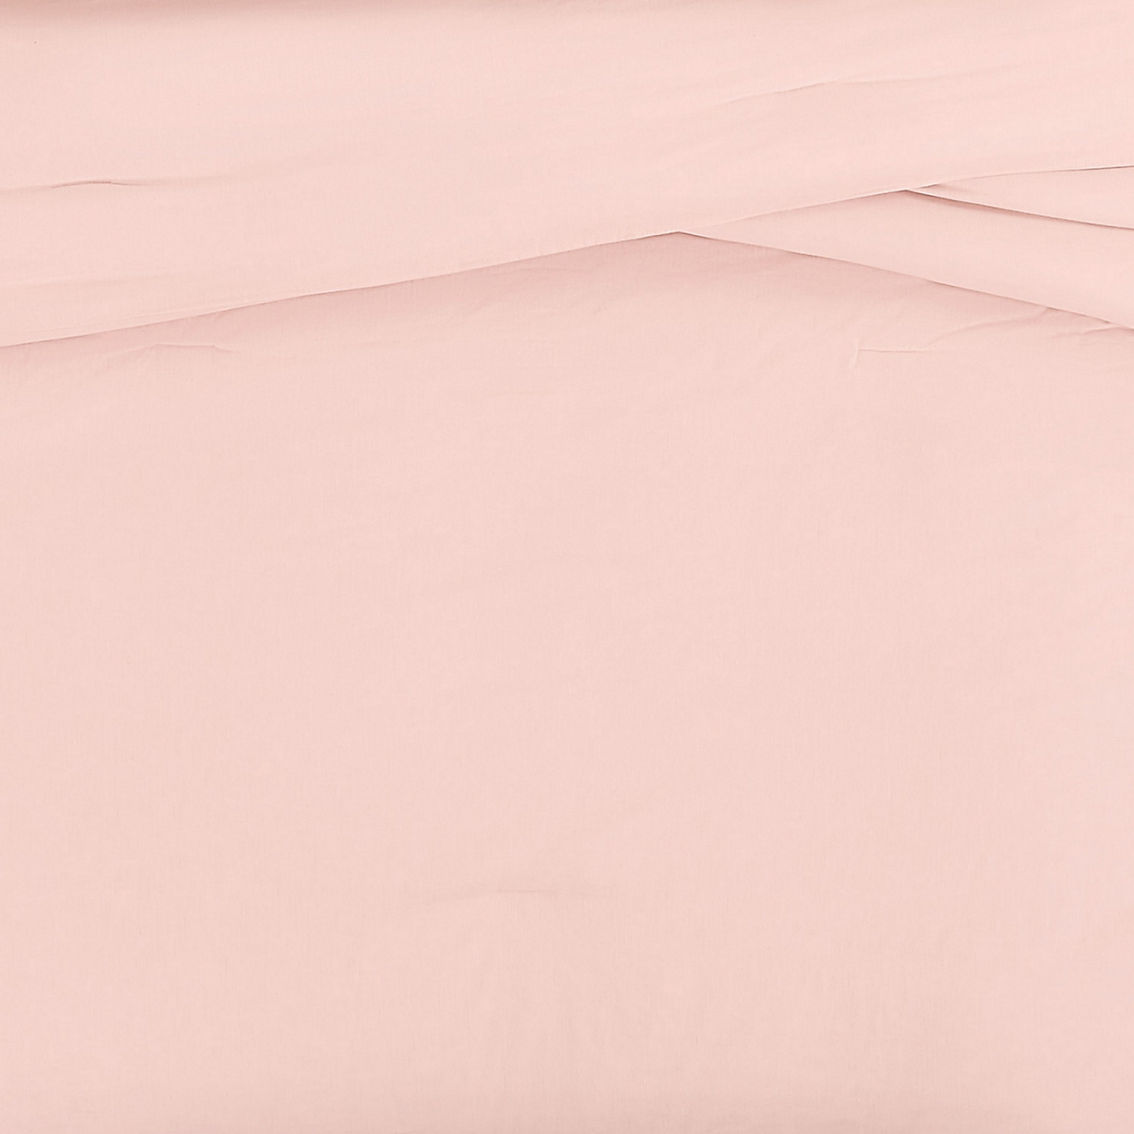 Brooklyn Loom 100% Linen 3 pc. Comforter Set - Image 4 of 4